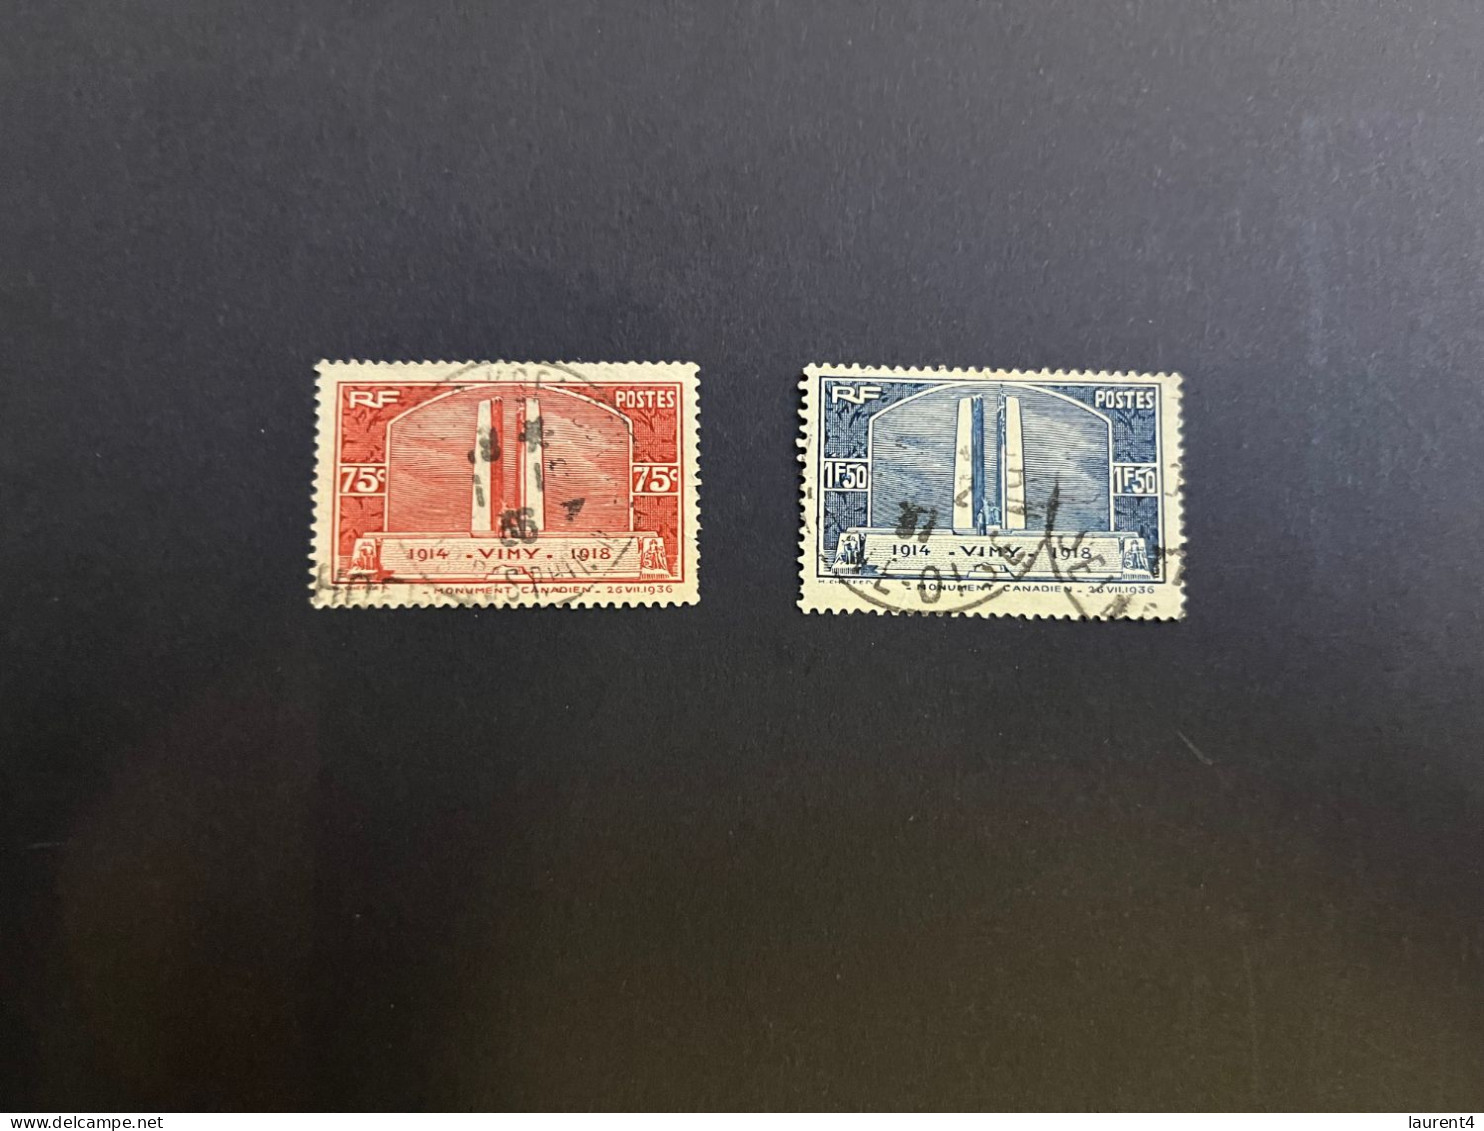 20-4-2024 (stamp) 2 Used Stamp - FRANCE - Vimy Memorial - Usados